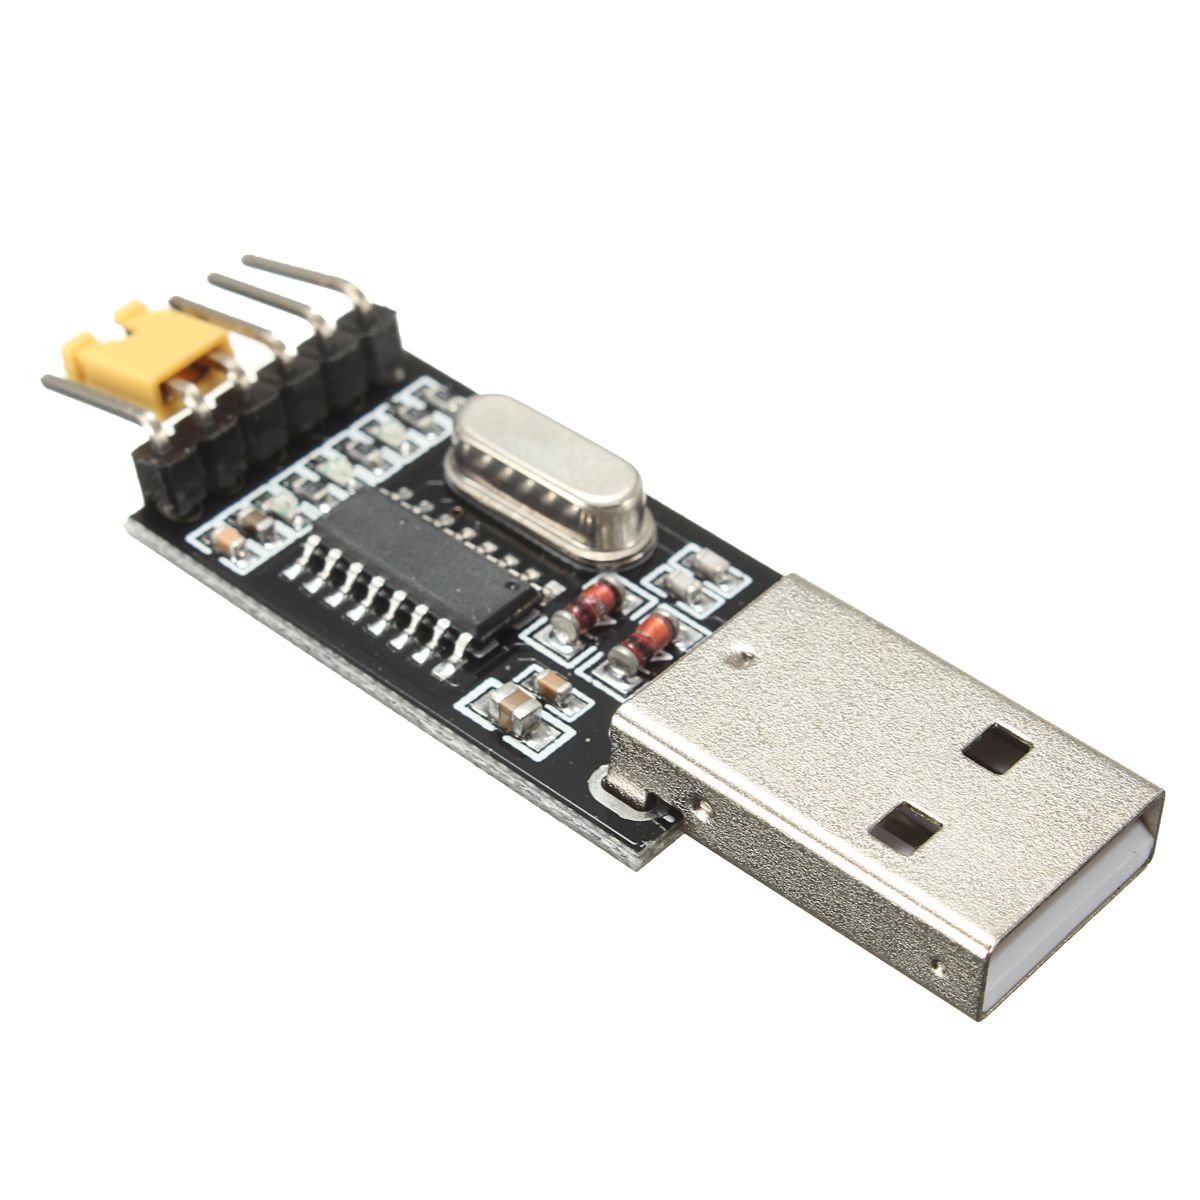 5pcs-33V-5V-USB-to-TTL-Convertor-CH340G-UART-Serial-Adapter-Module-STC-1314966